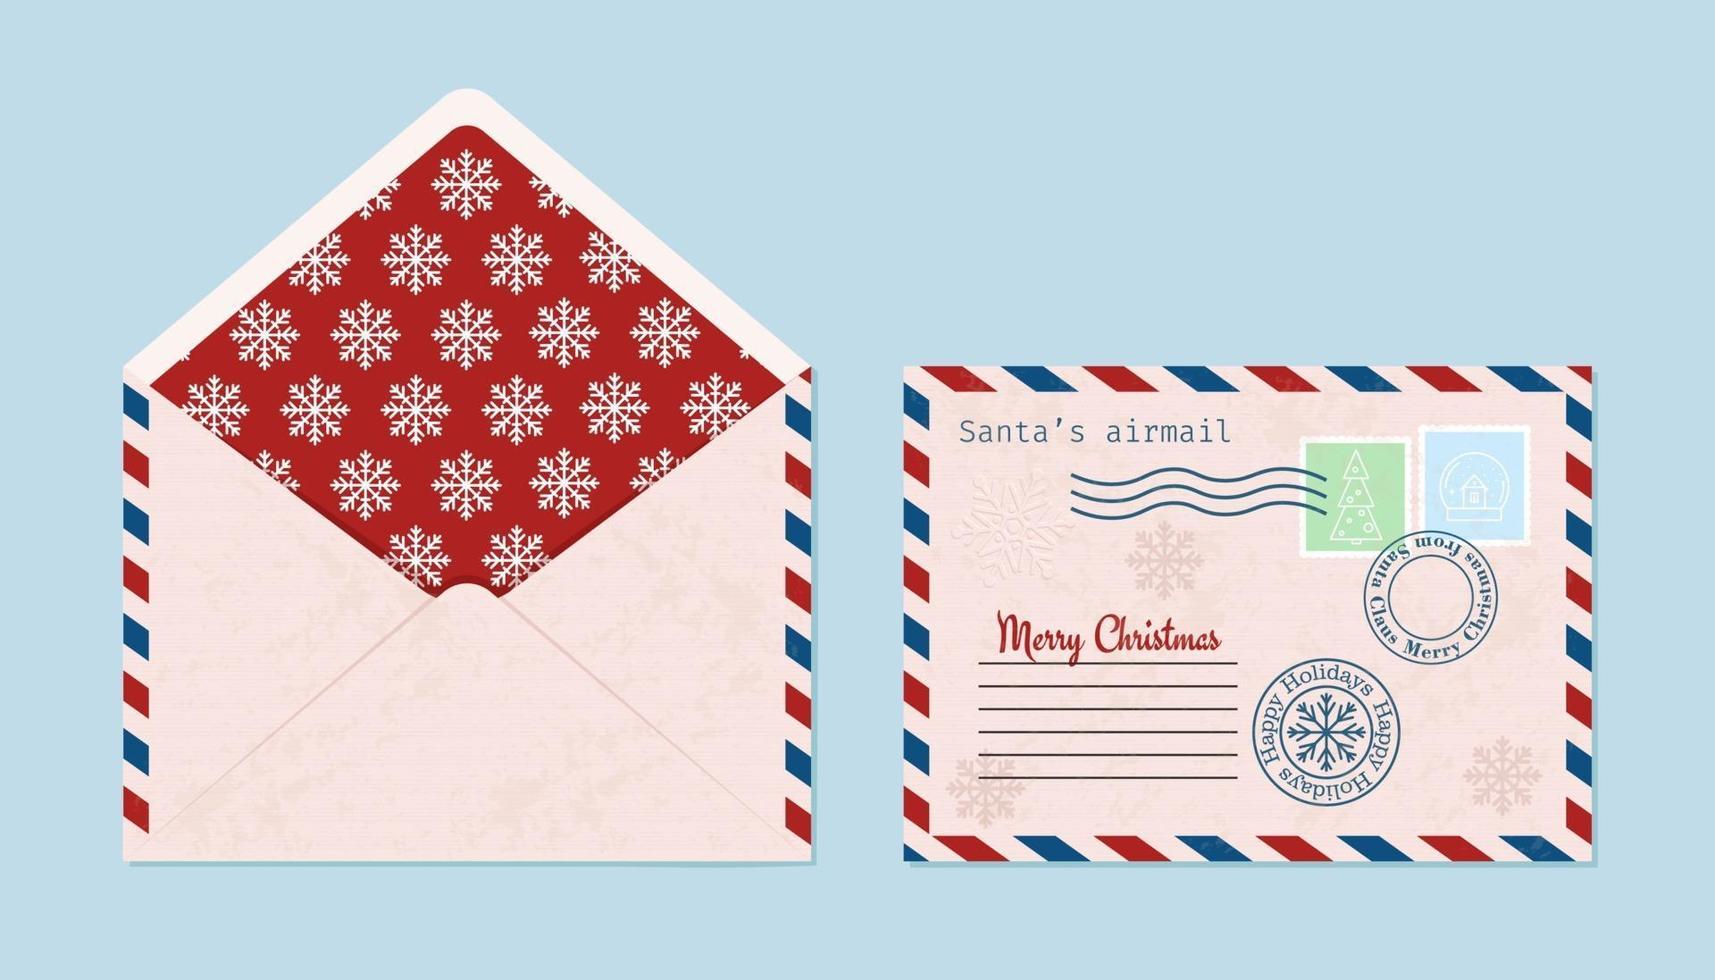 envelope de natal com selos, selos, aberto e fechado. vetor